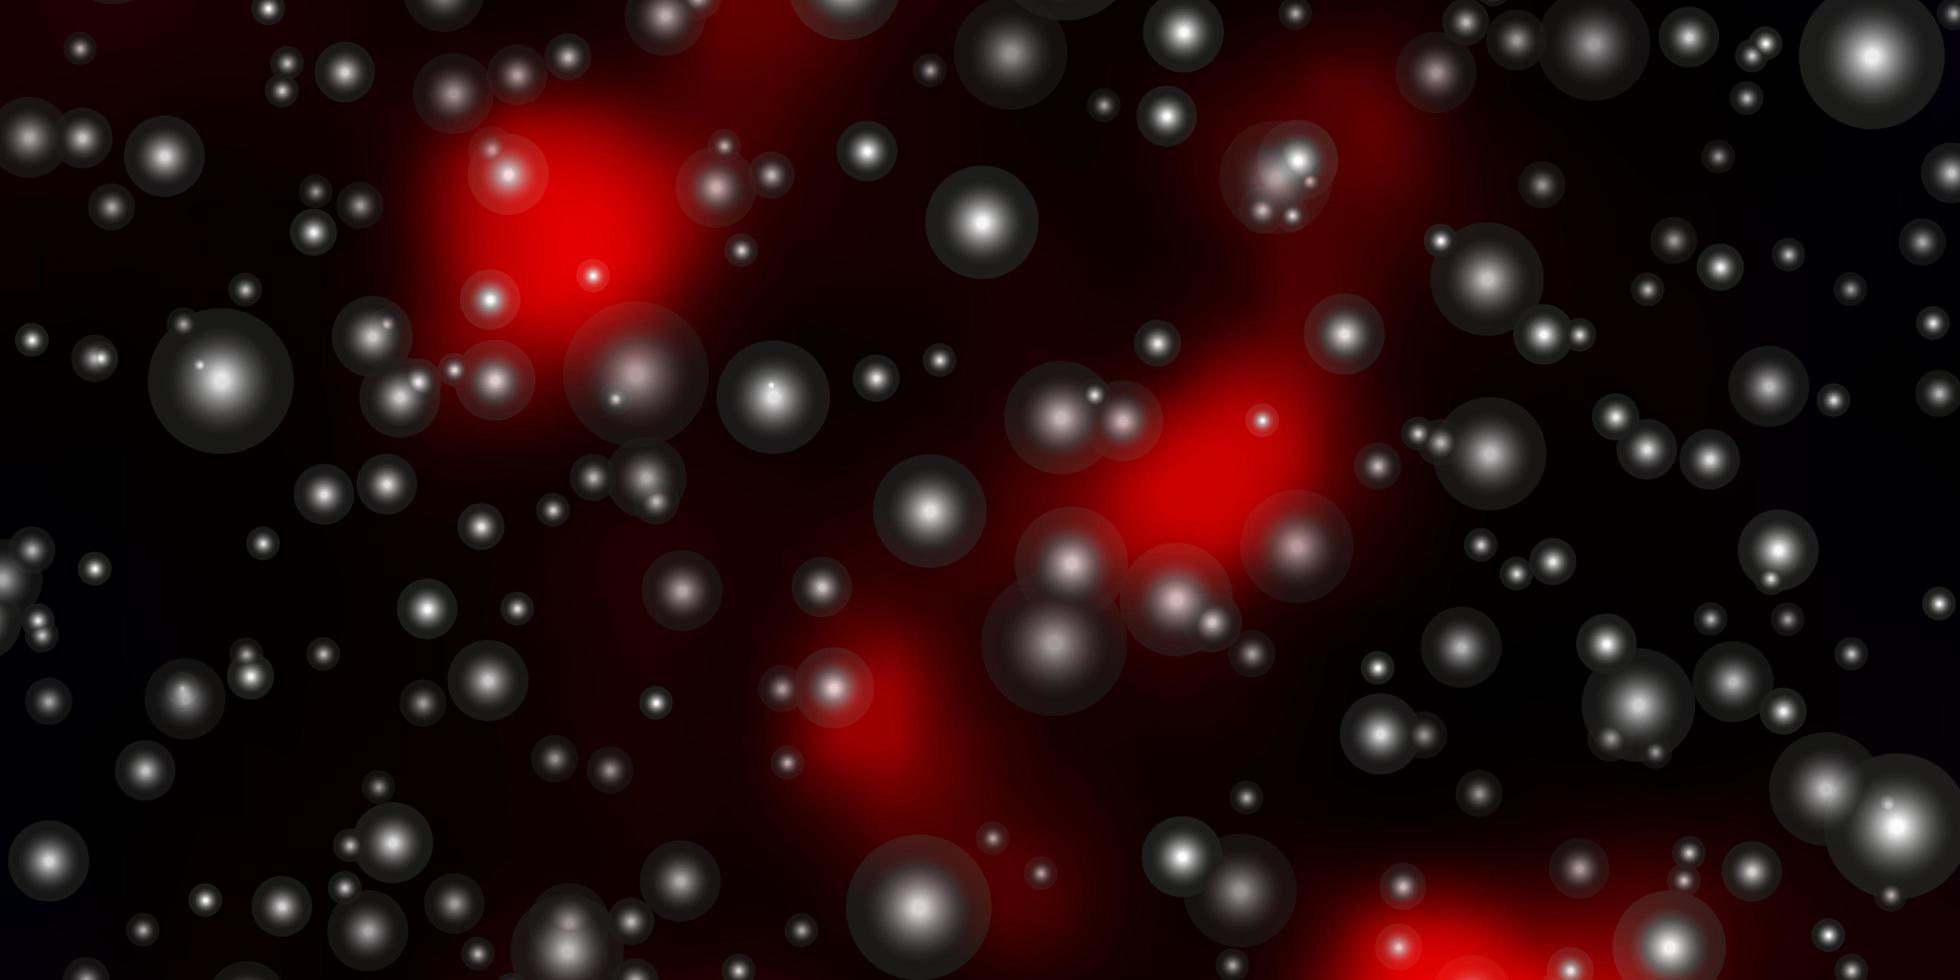 plantilla de vector rojo oscuro con estrellas de neón. Ilustración colorida con estrellas de degradado abstracto. tema para teléfonos celulares.